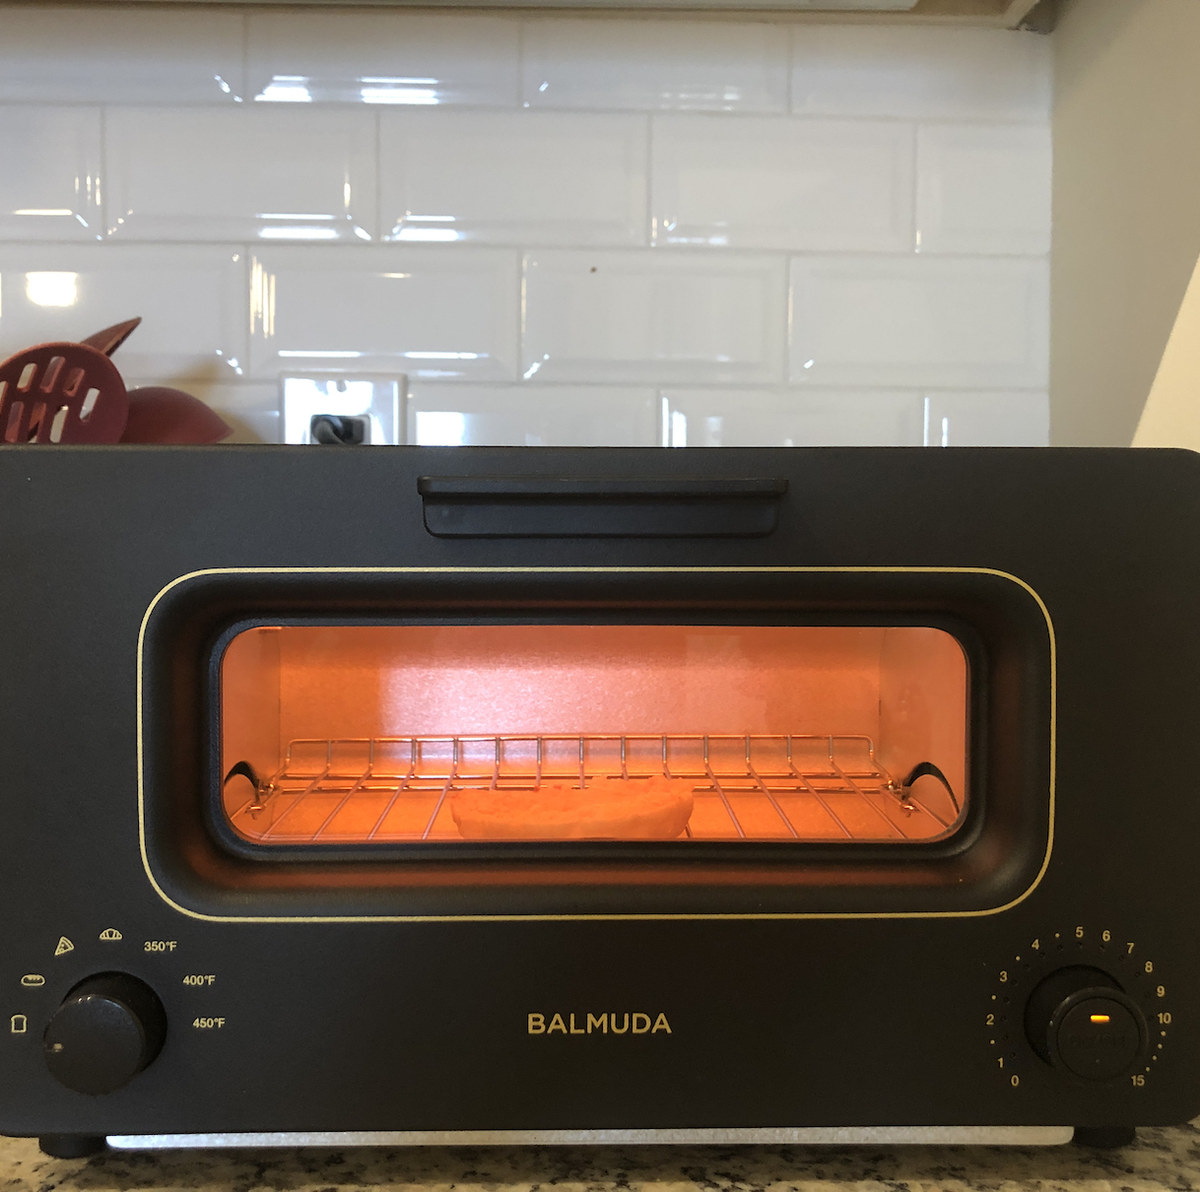 BALMUDA The Toaster Steam Toaster Oven